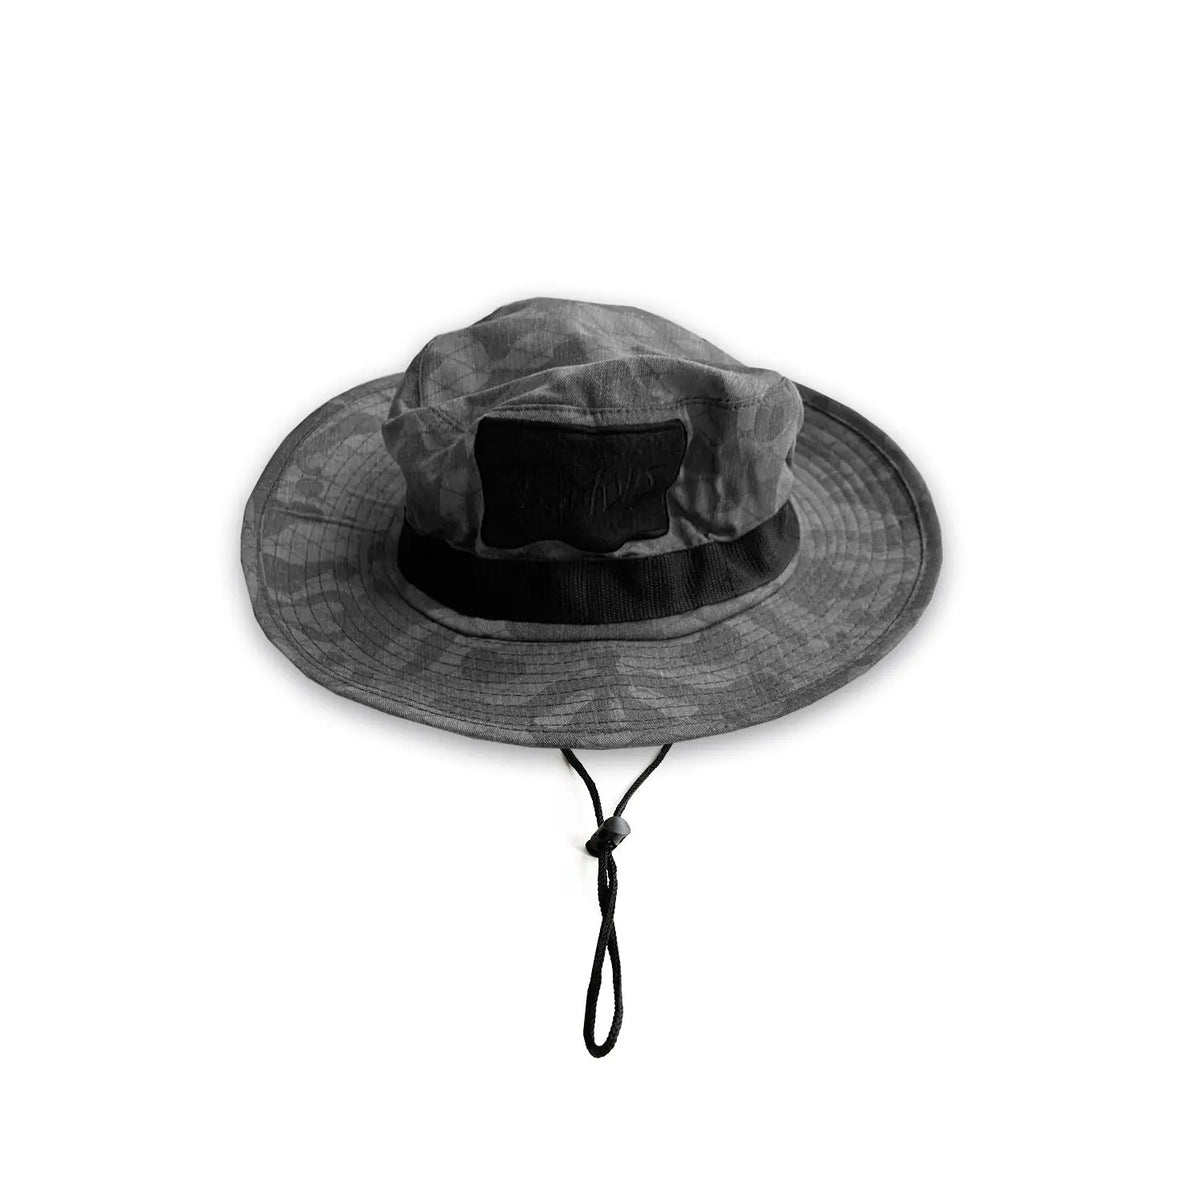 Infamous Boonie Hat